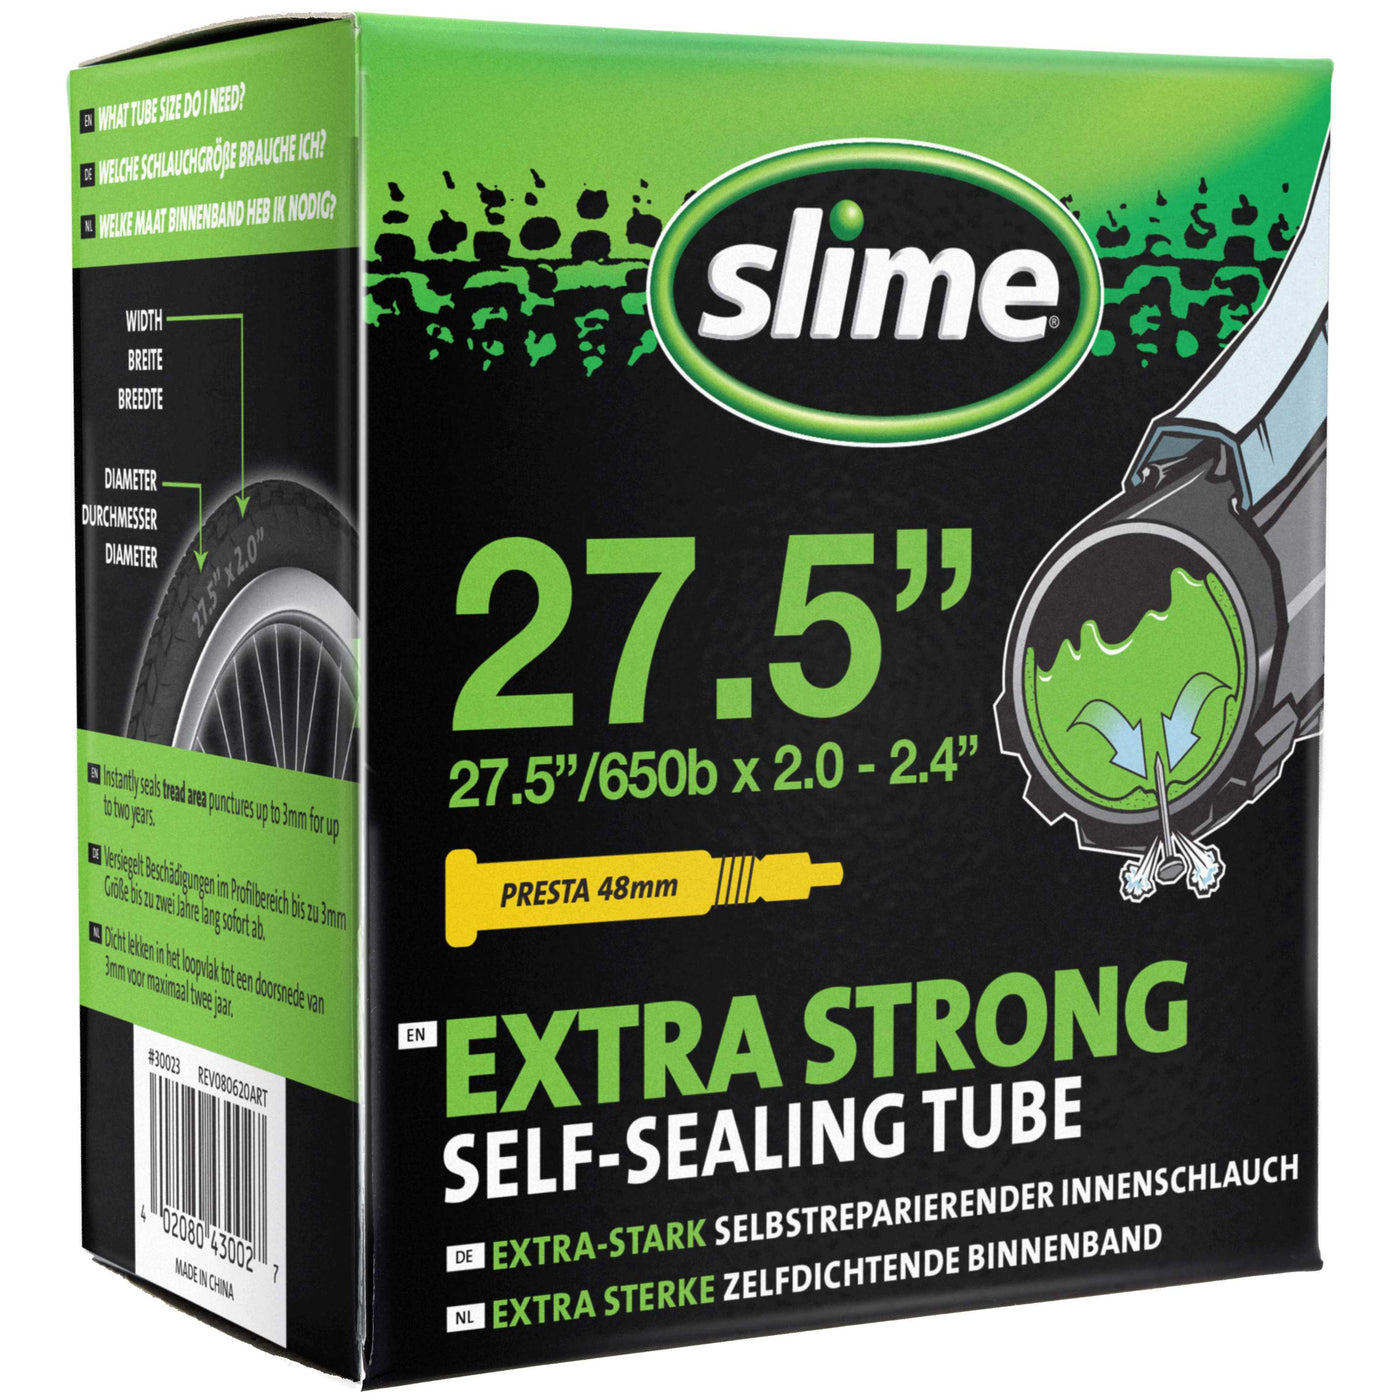 Slime Smart Tube - 27.5" x 2.00-2.40 - Presta Valve